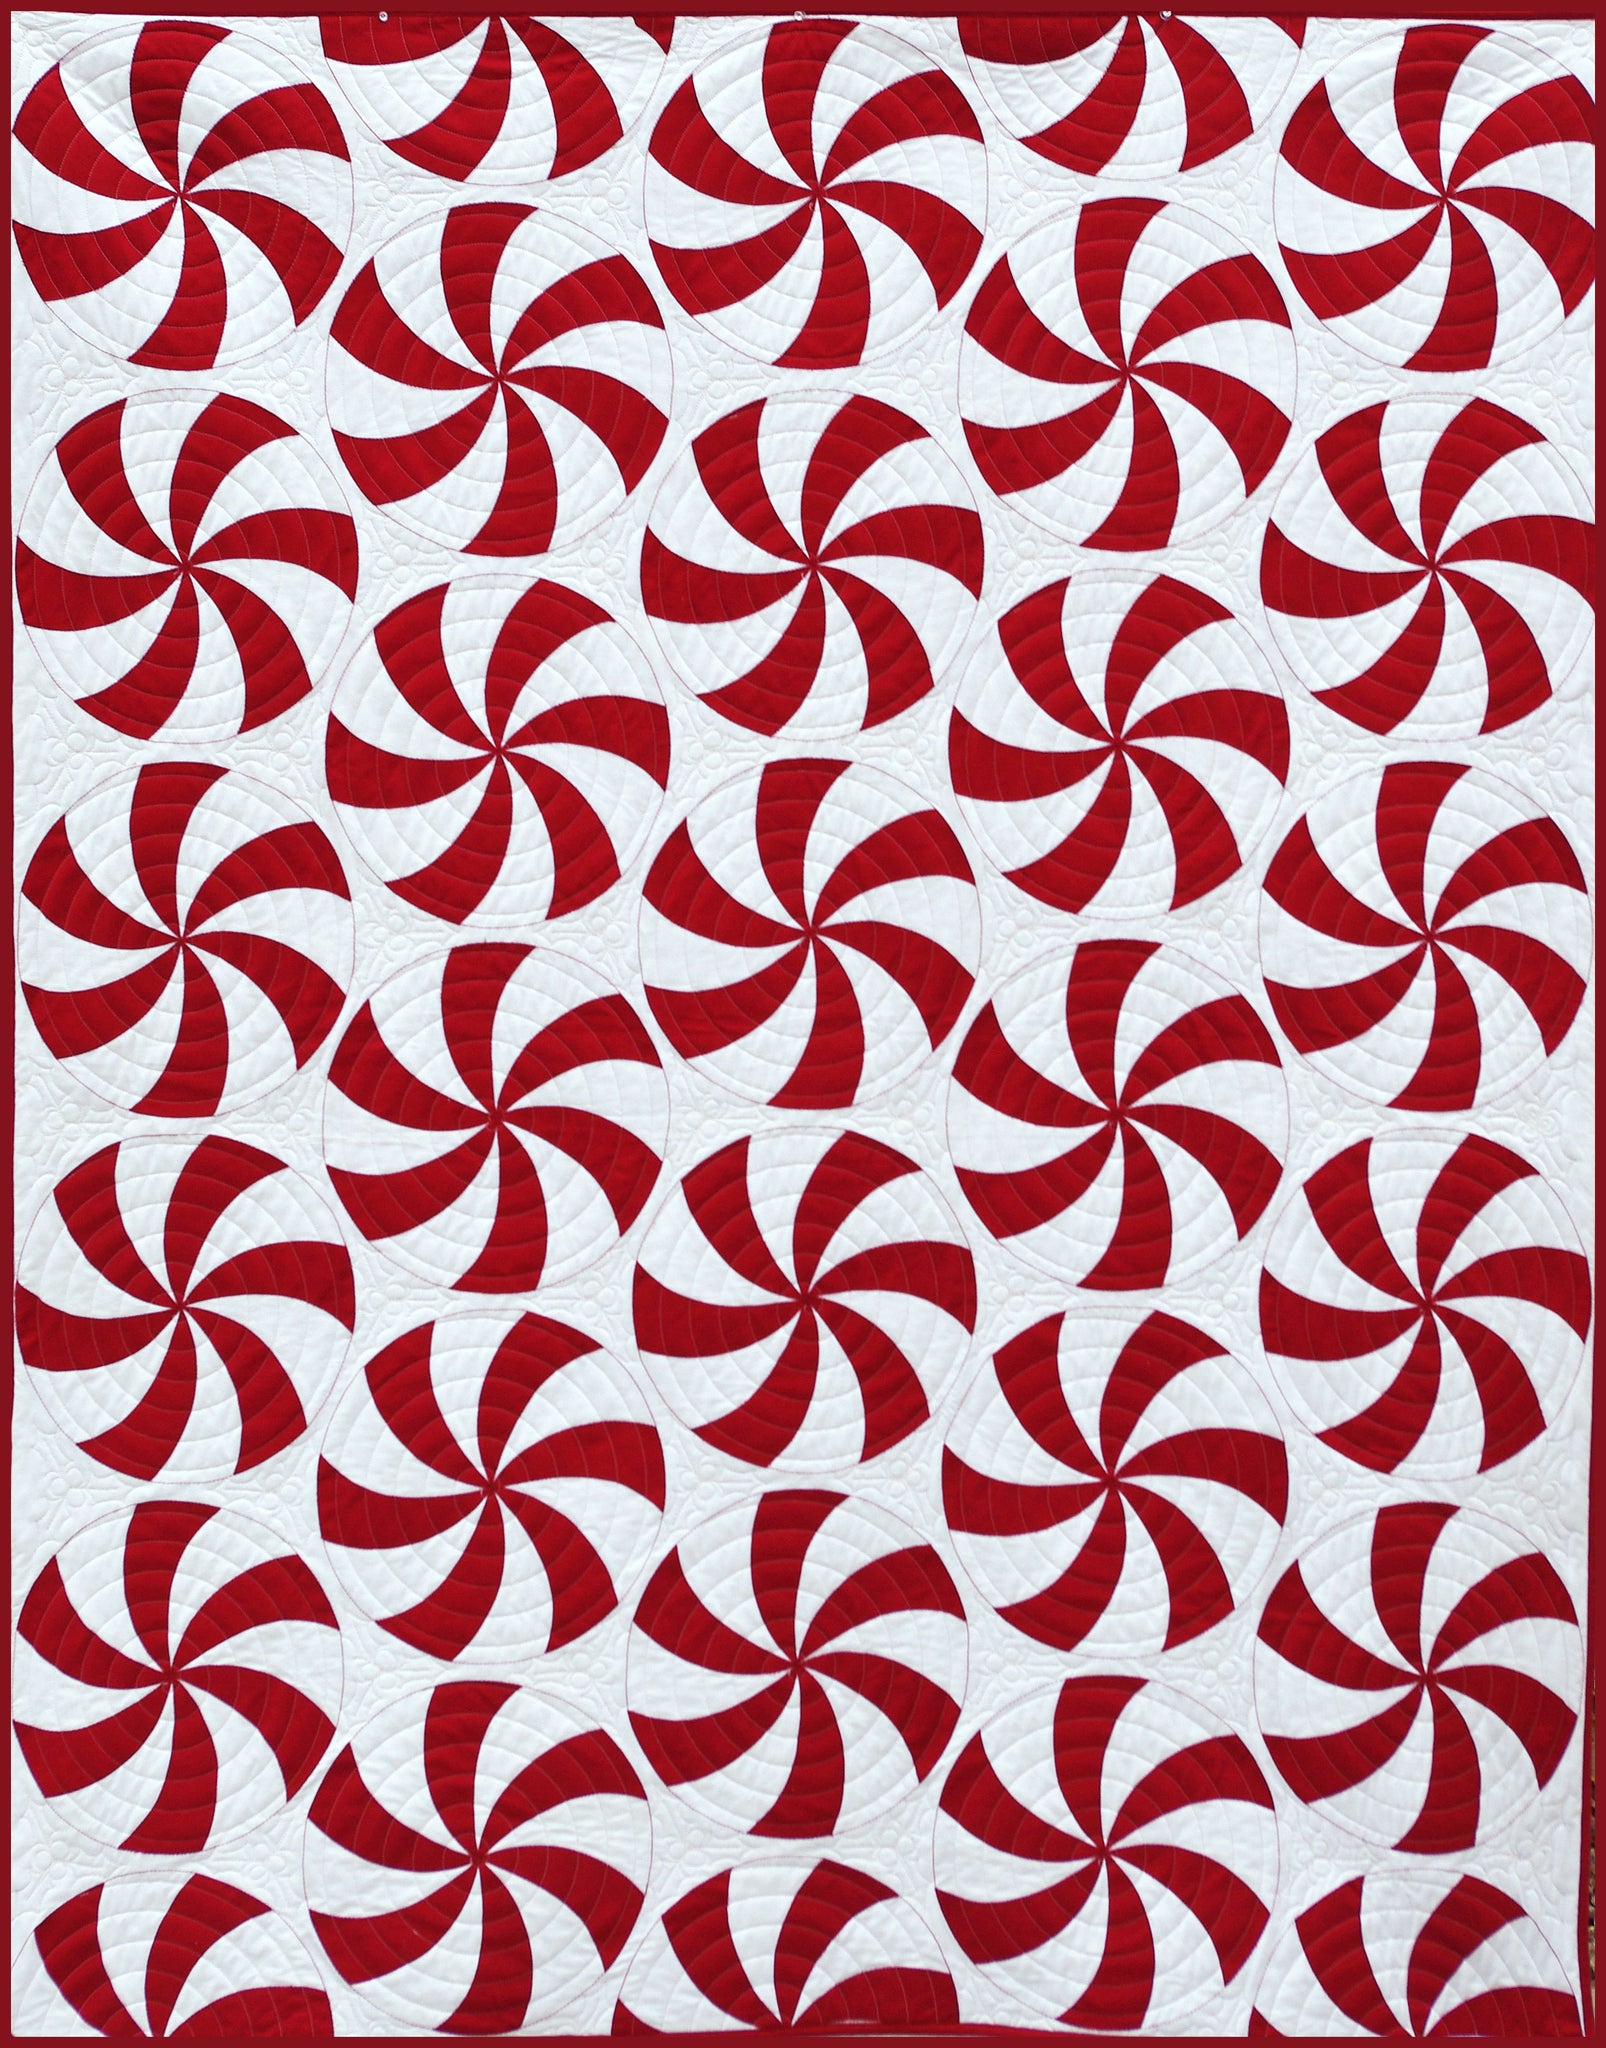 Peppermint Swirl Quilt Pattern - PDF